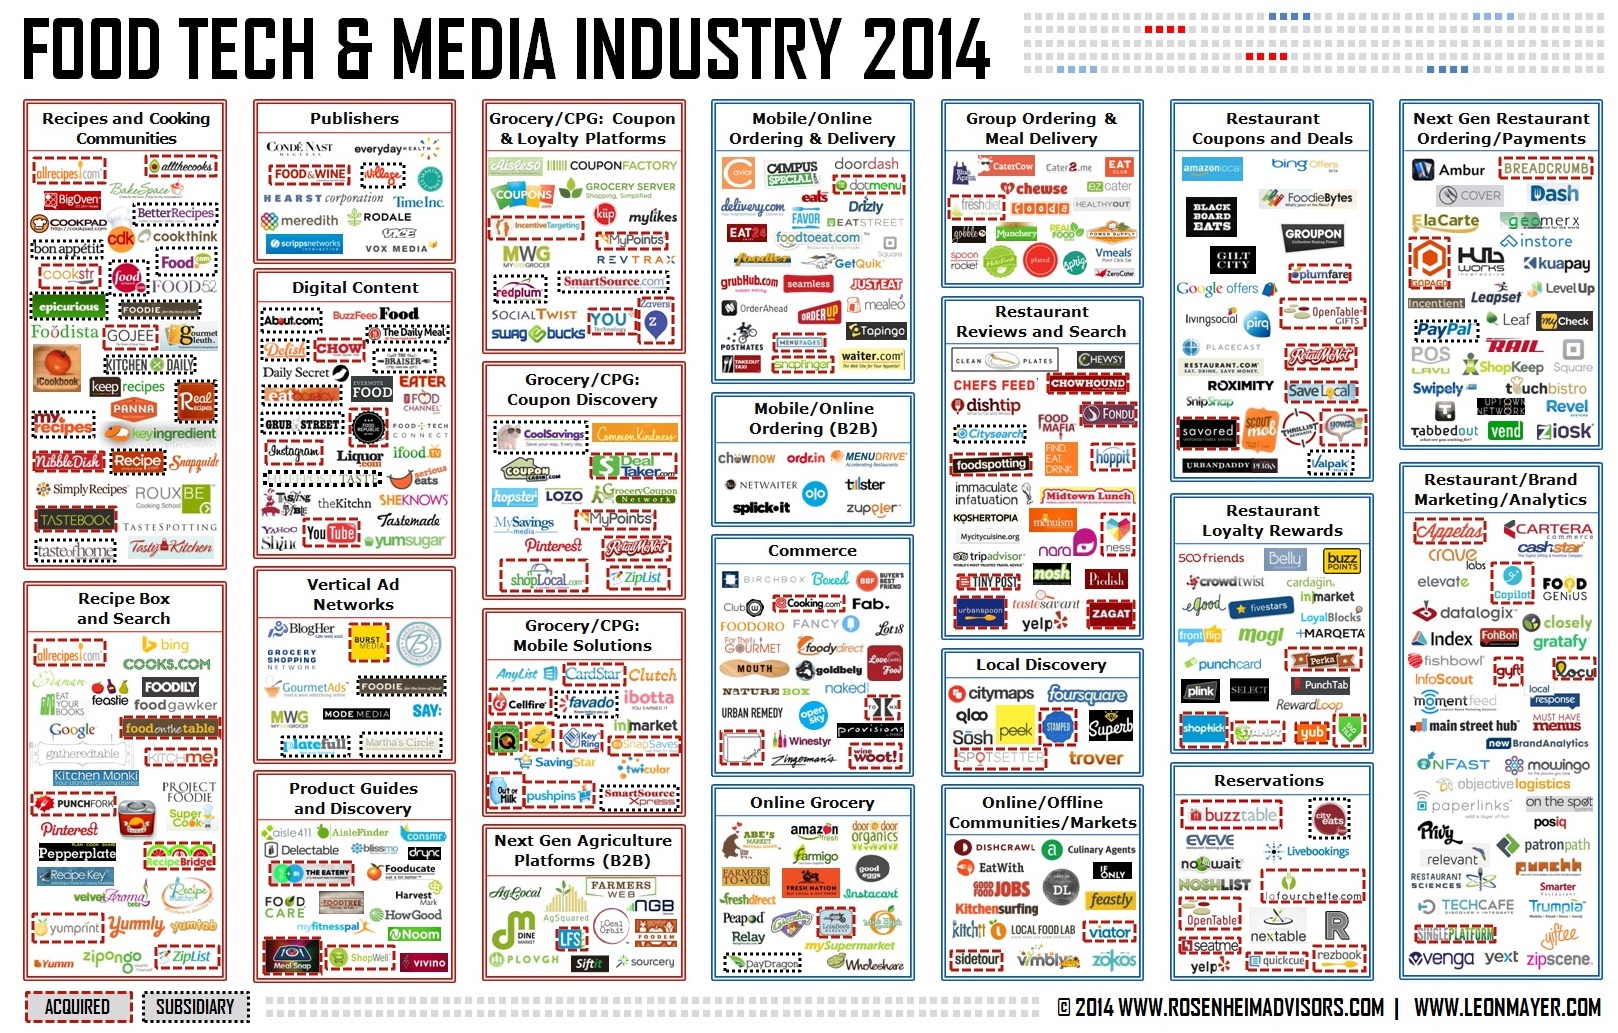 Food Tech and Media Industry 2014 - Rosenheim Advisors and Leon Mayer